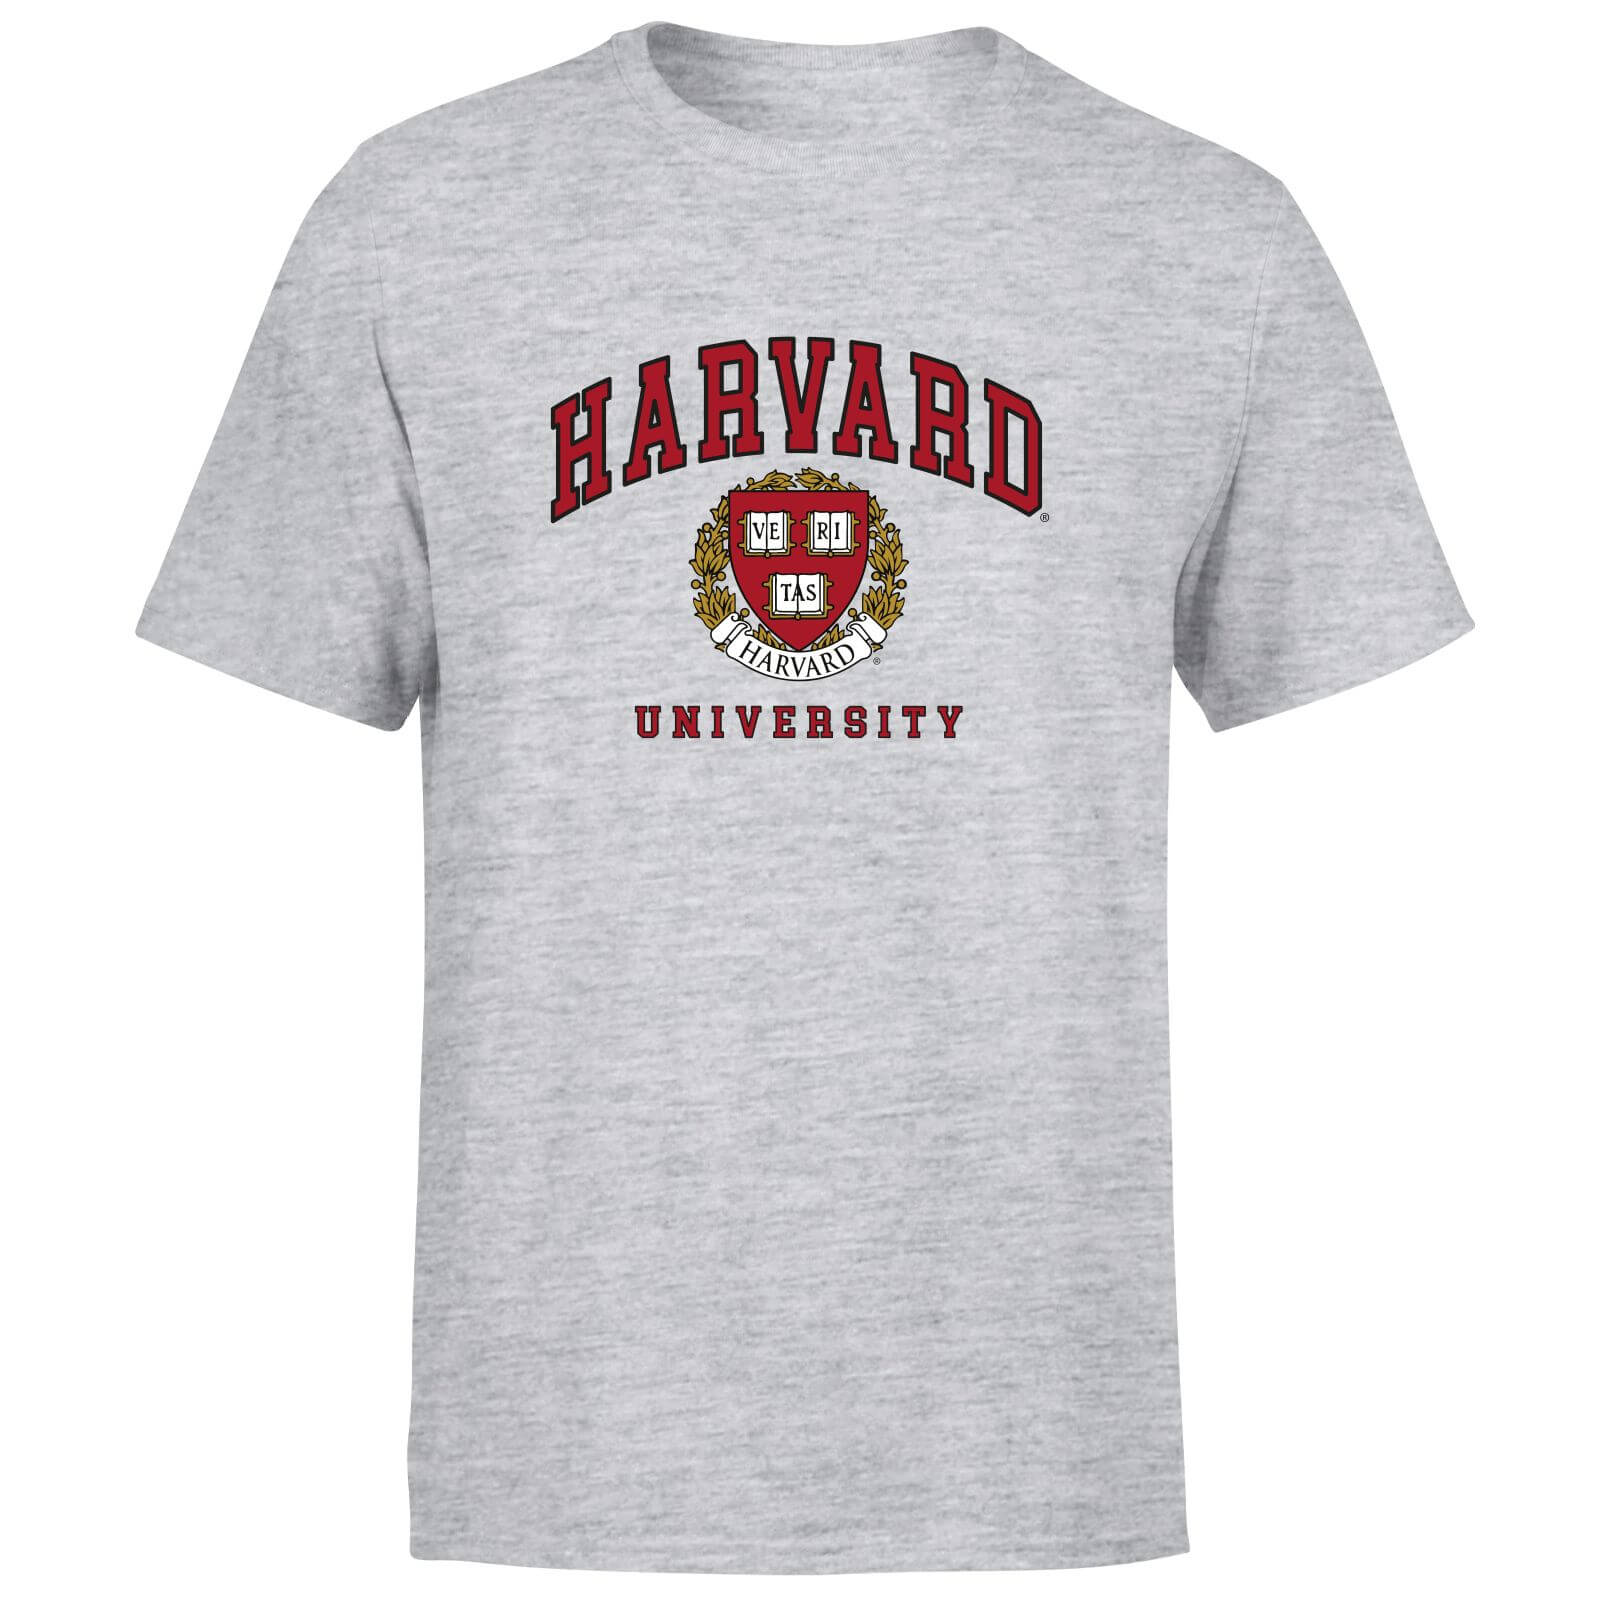 Harvard Gray Tee Men's T-Shirt - Grey - XS